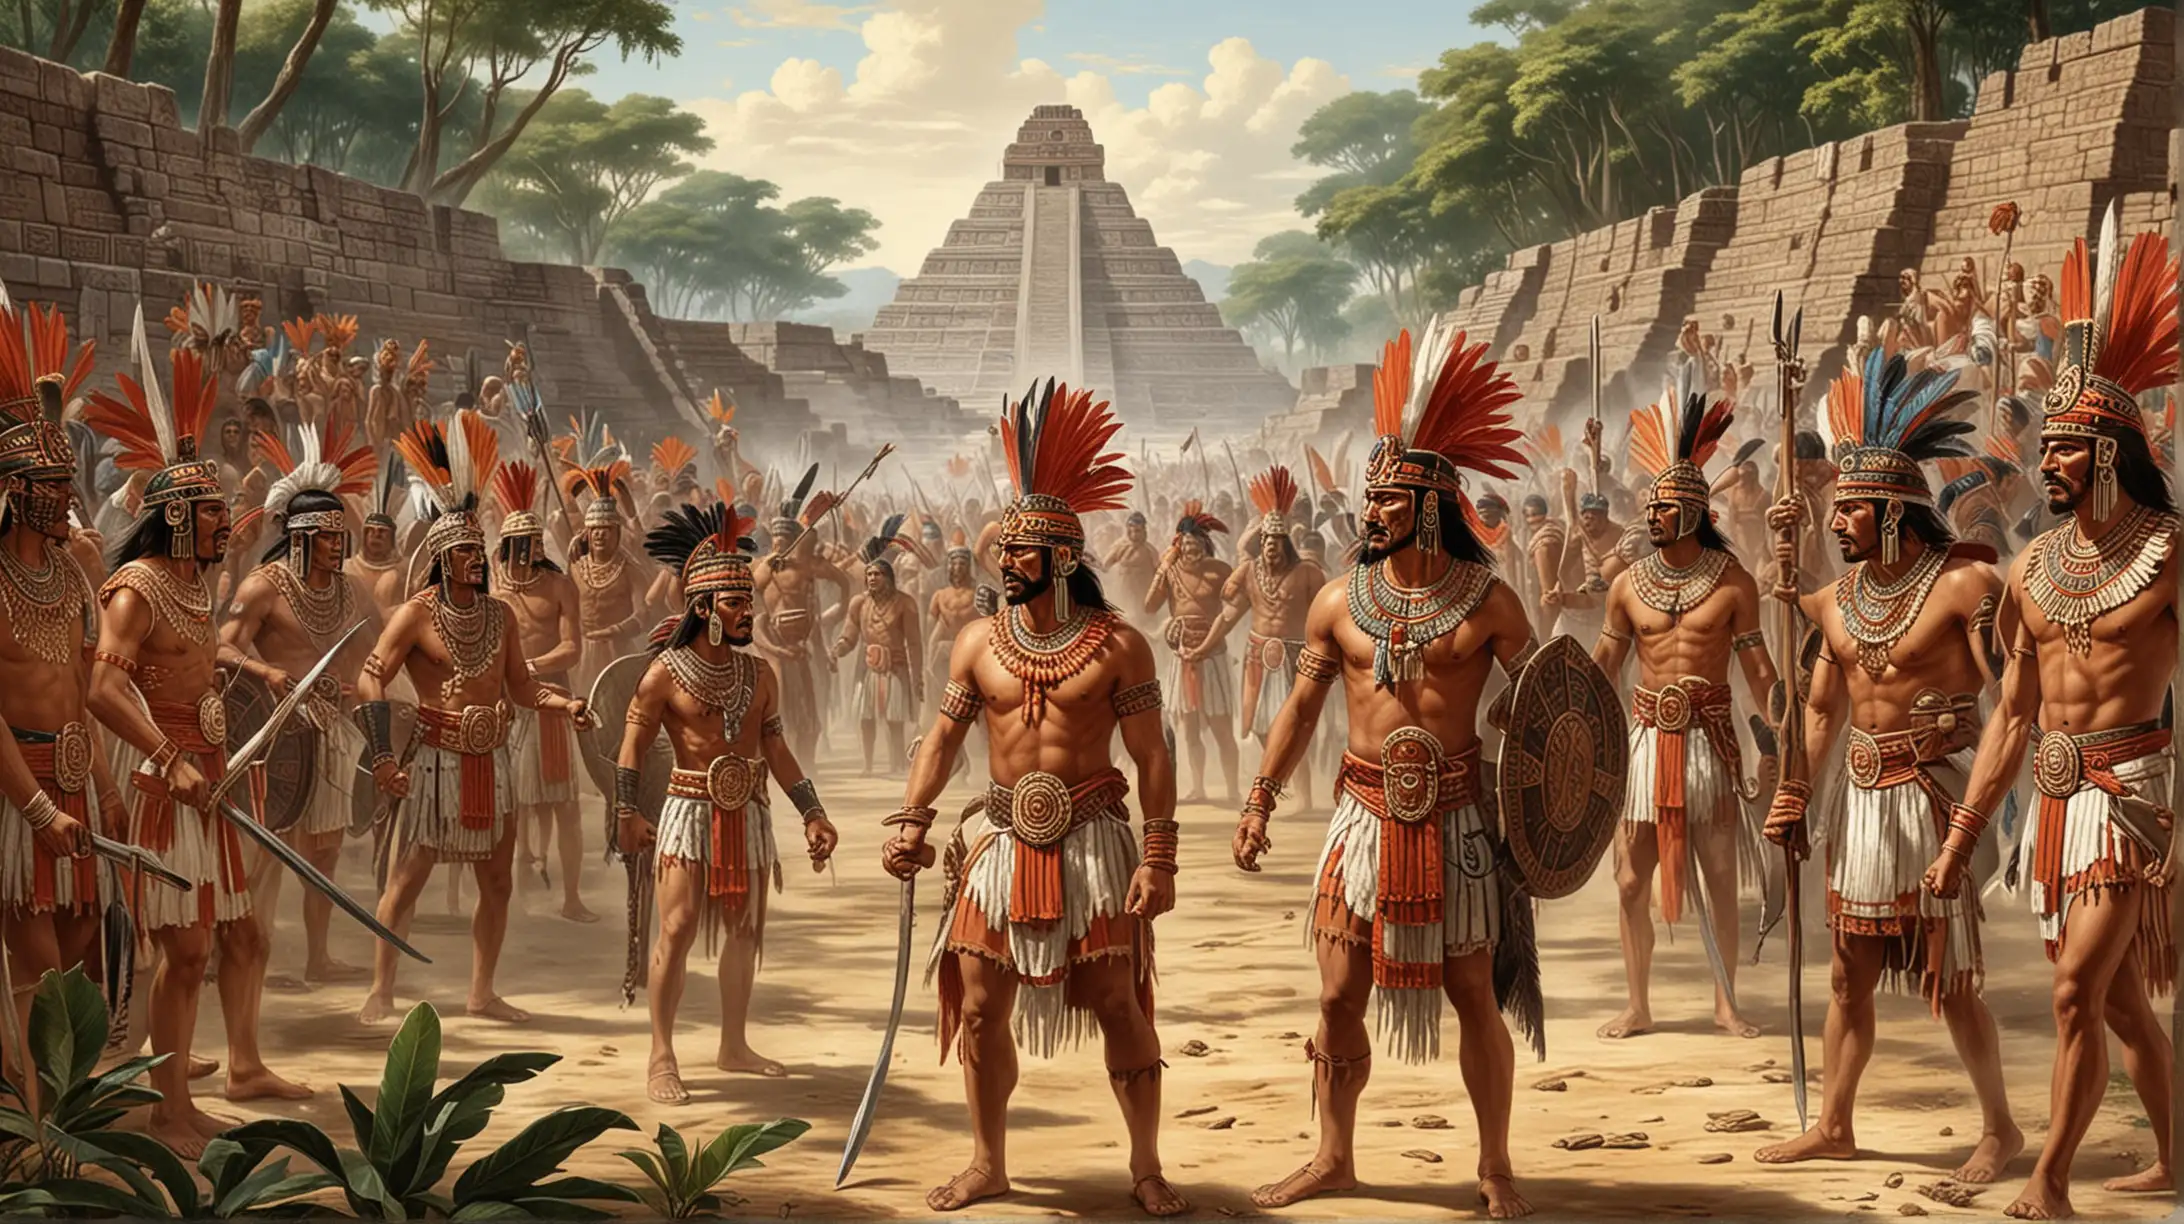 Aztec Empire Negotiating Alliances and Expanding Territory